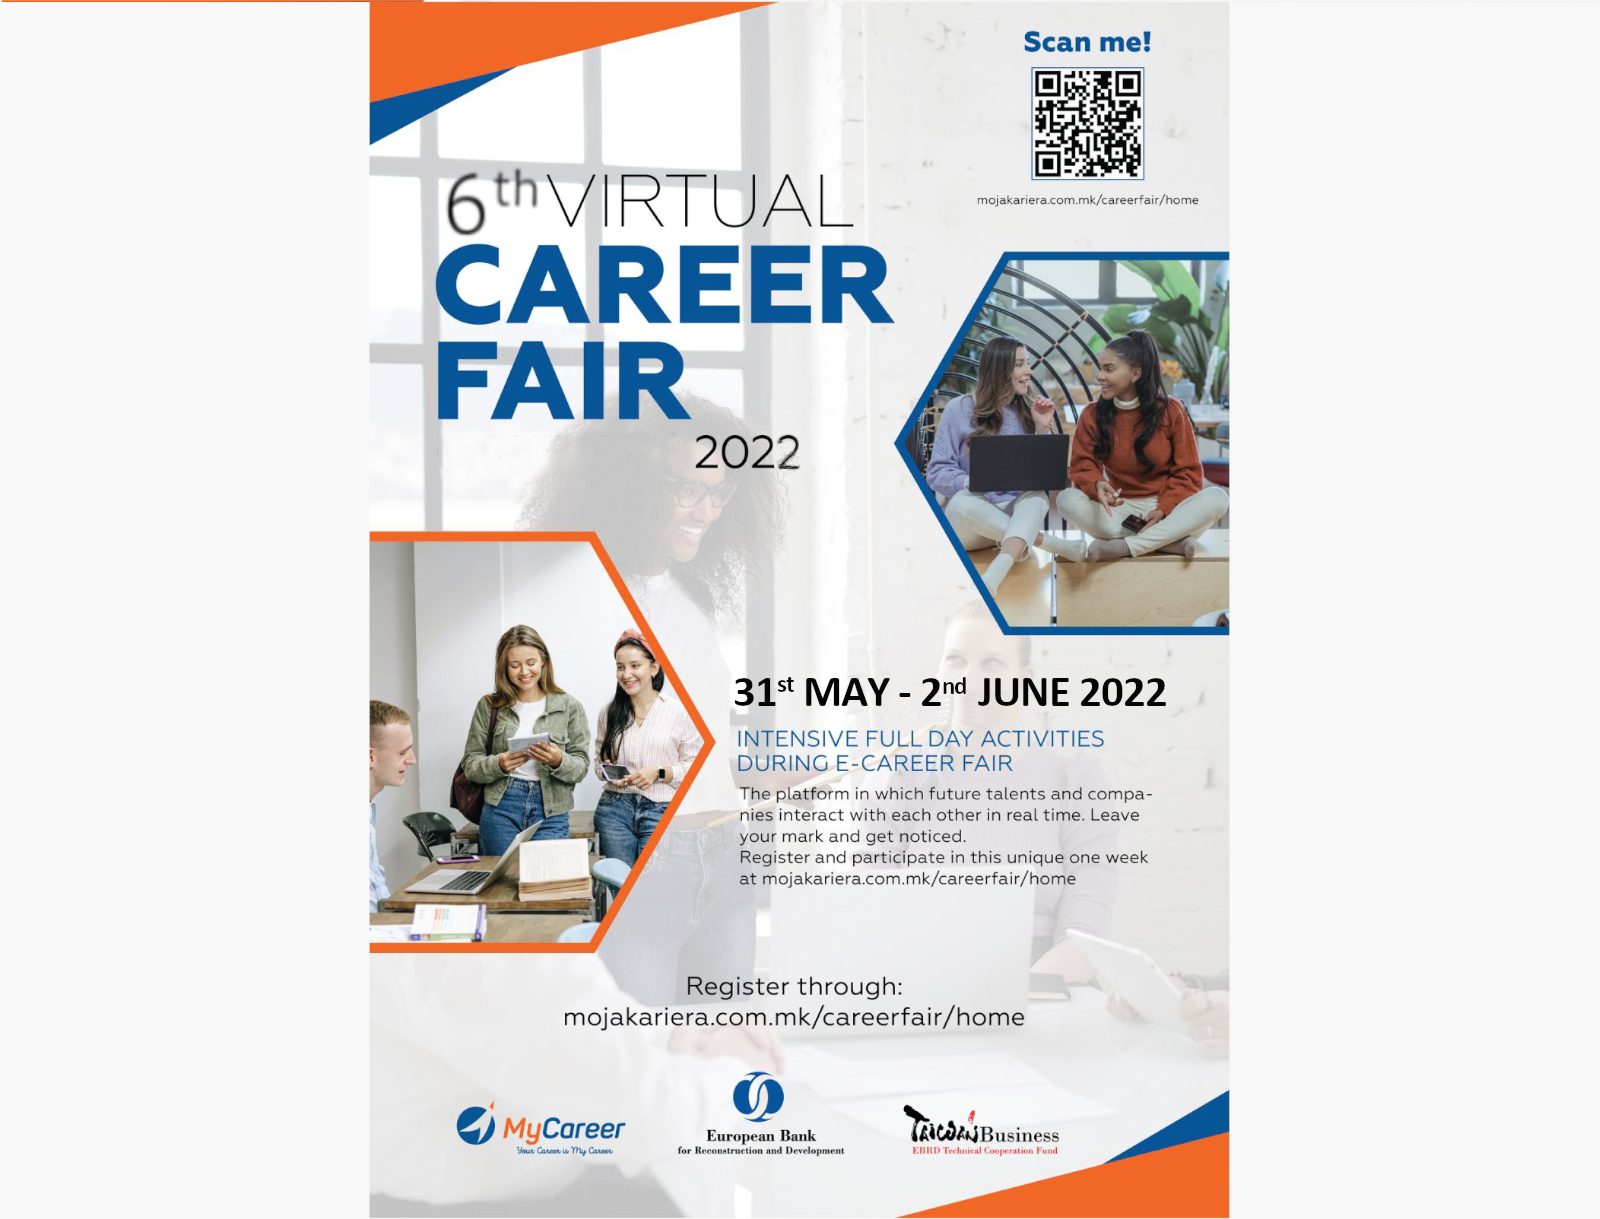 The 6th virtual career fair, May 31st June 2nd 2022